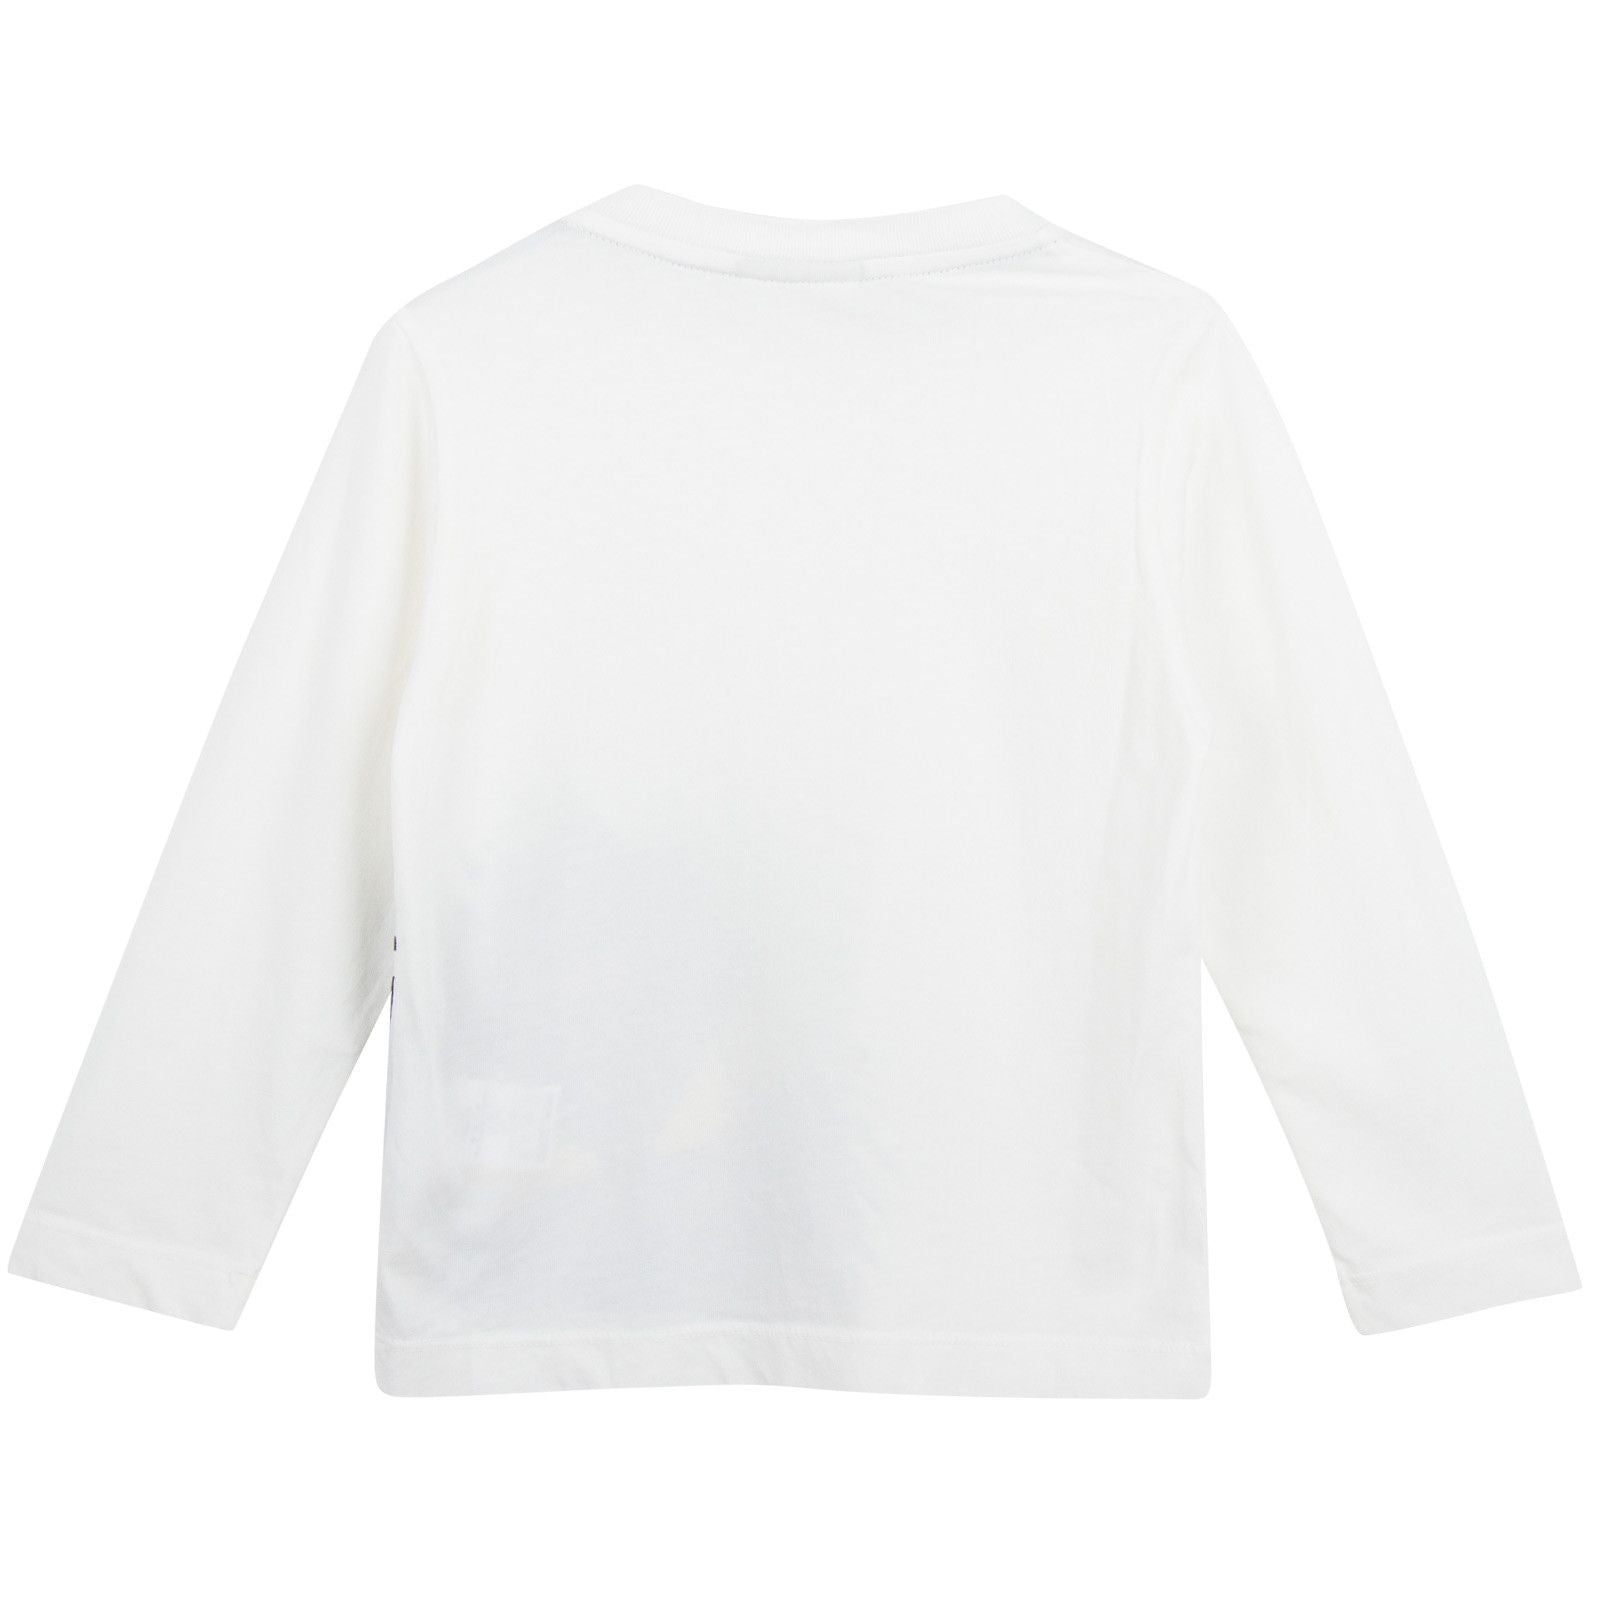 Boys White Cotton T-Shirt With Monster Logo - CÉMAROSE | Children's Fashion Store - 2